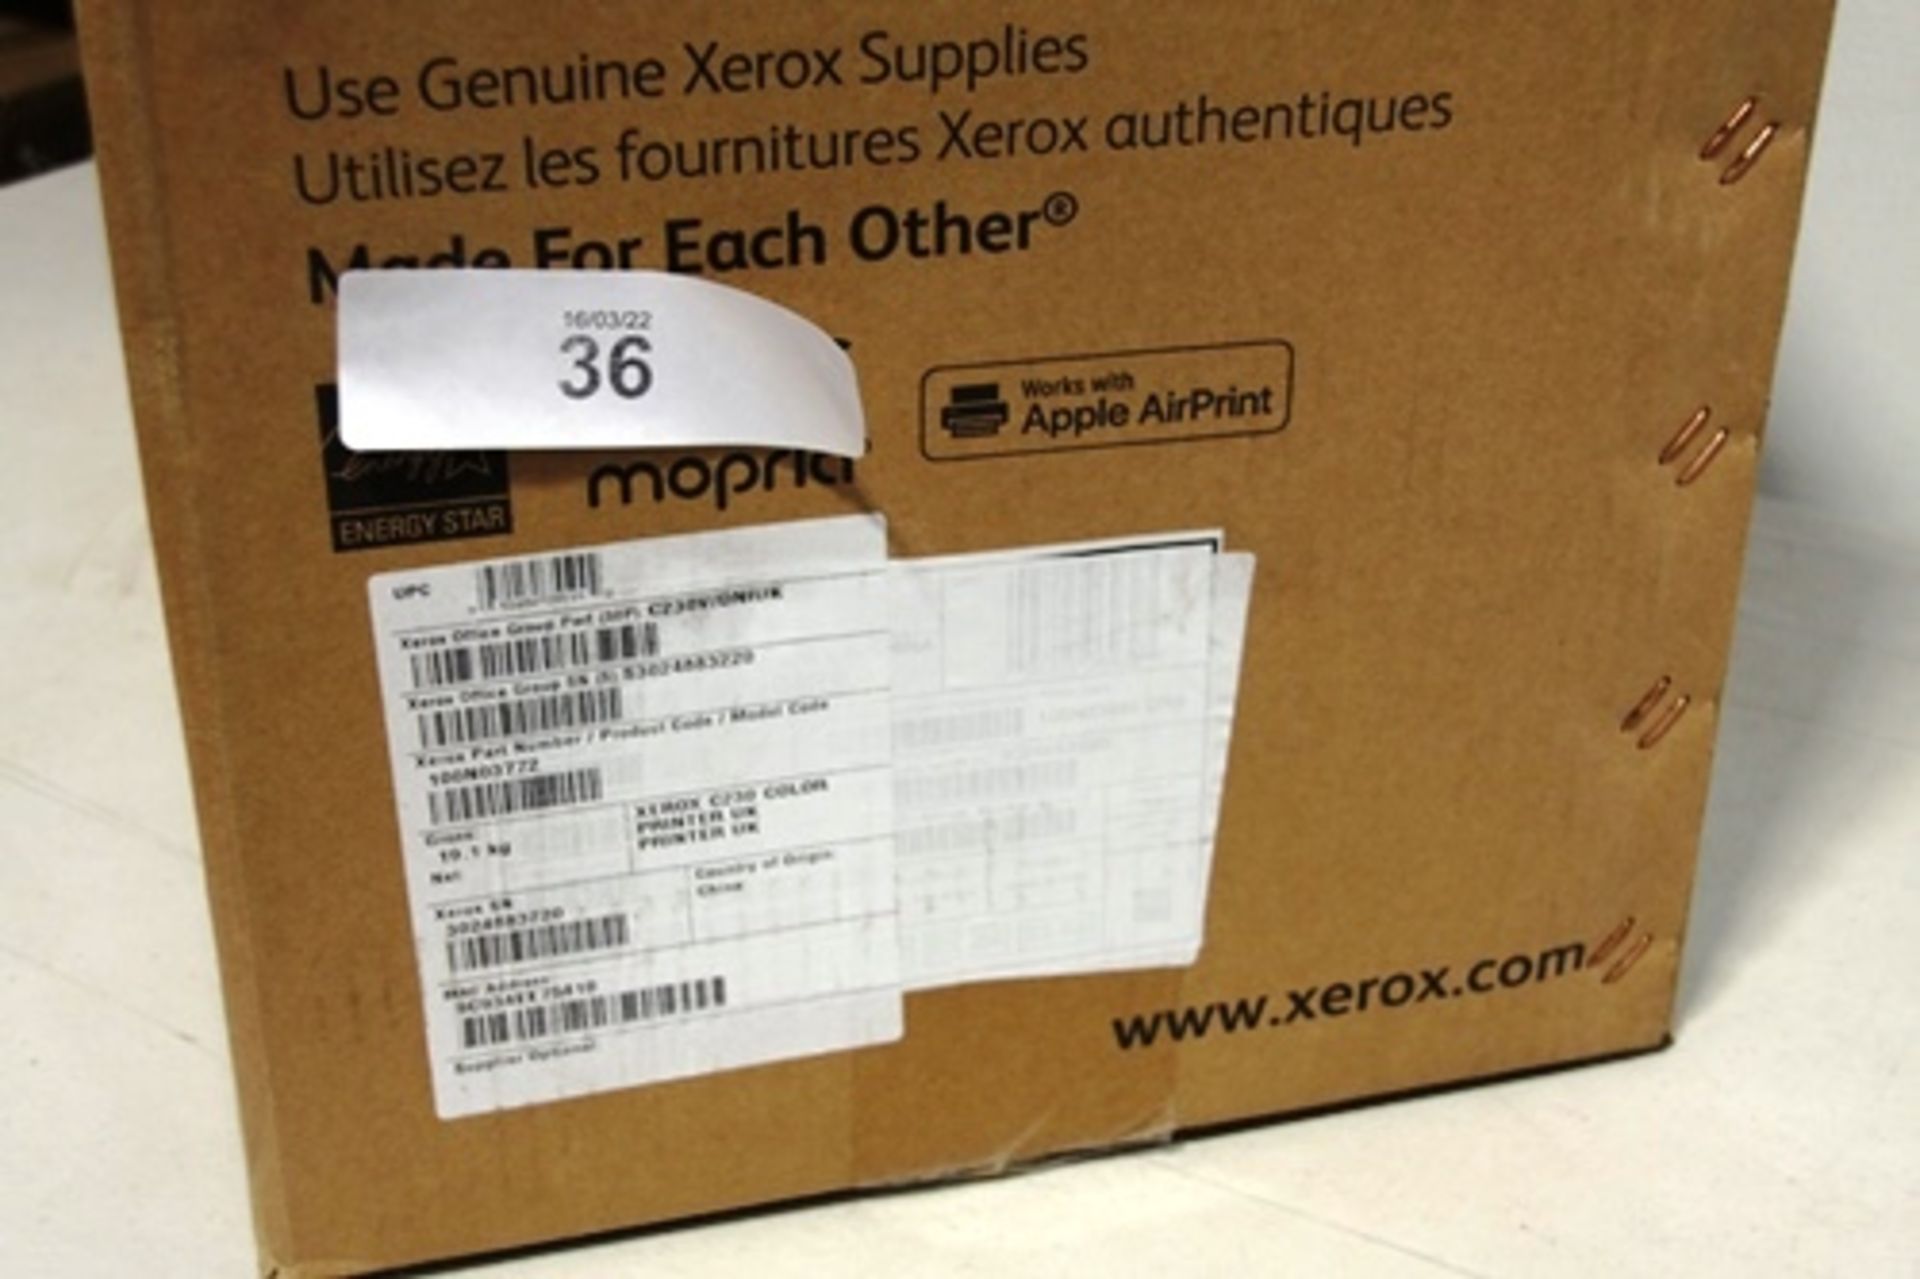 1 x Xerox C230 colour printer, model 100N03772 - New in box (ES8) - Image 3 of 3